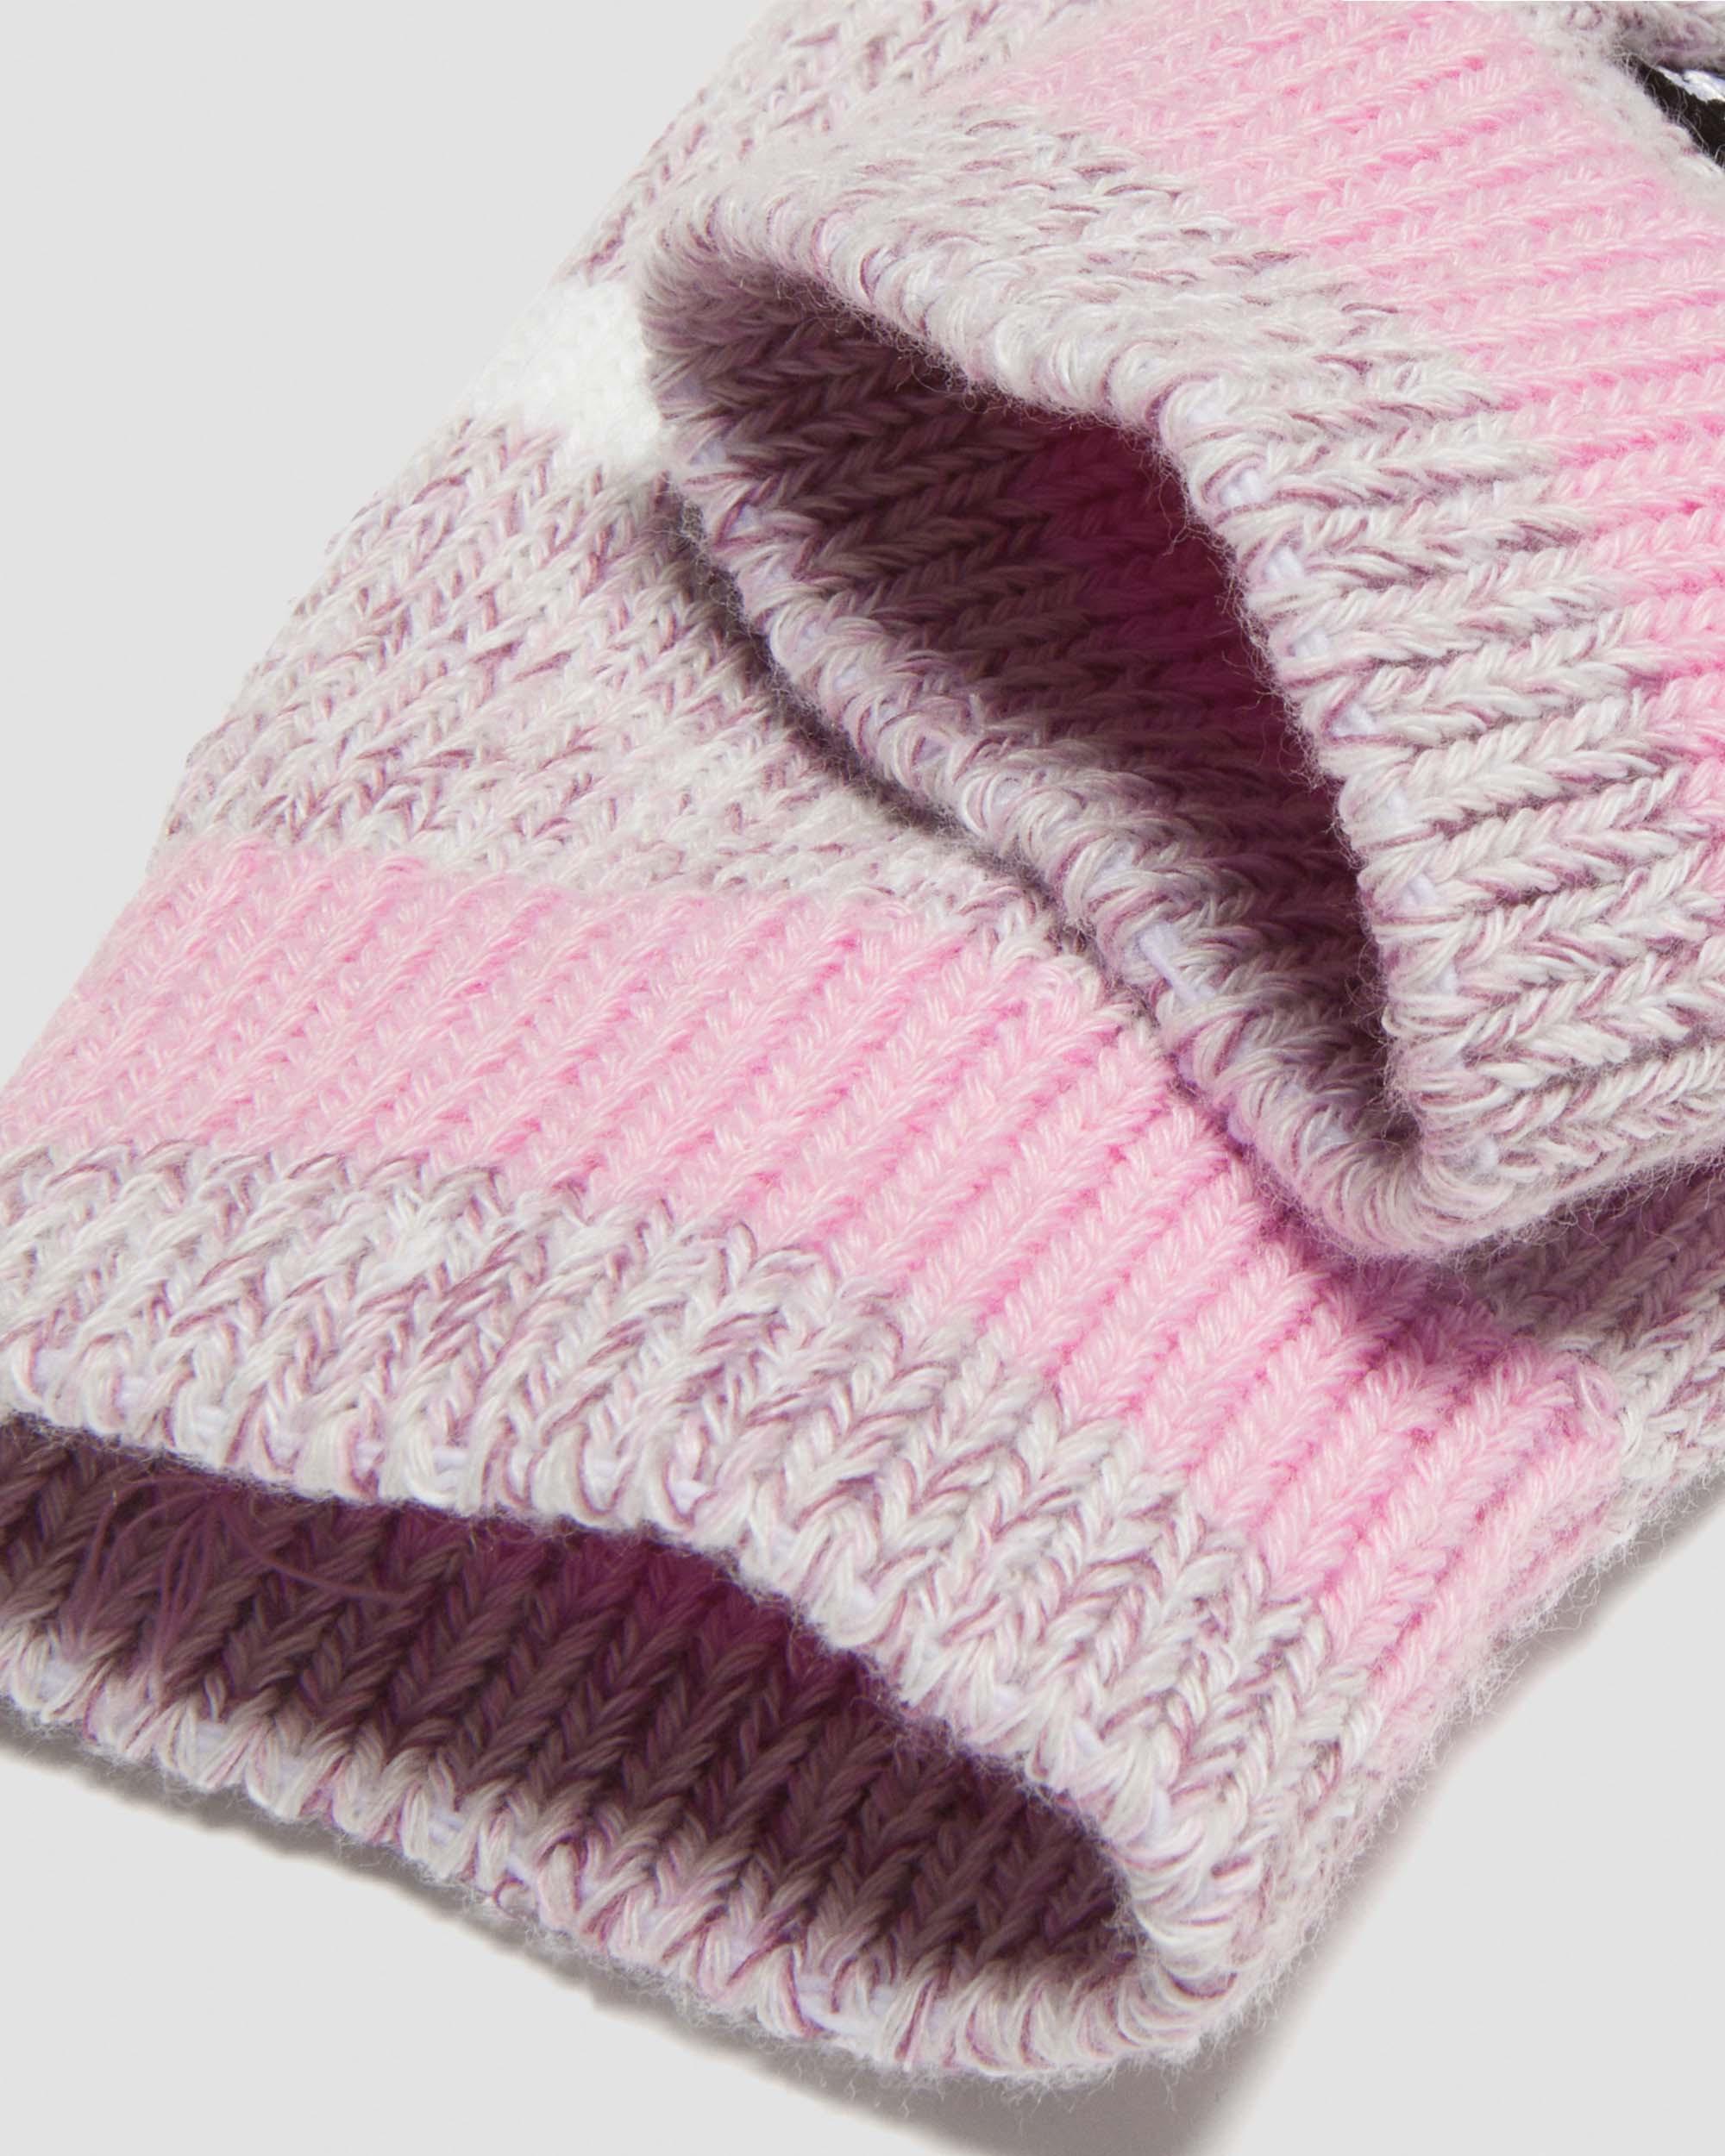 Marl Organic Socks in Pink | Dr. Martens